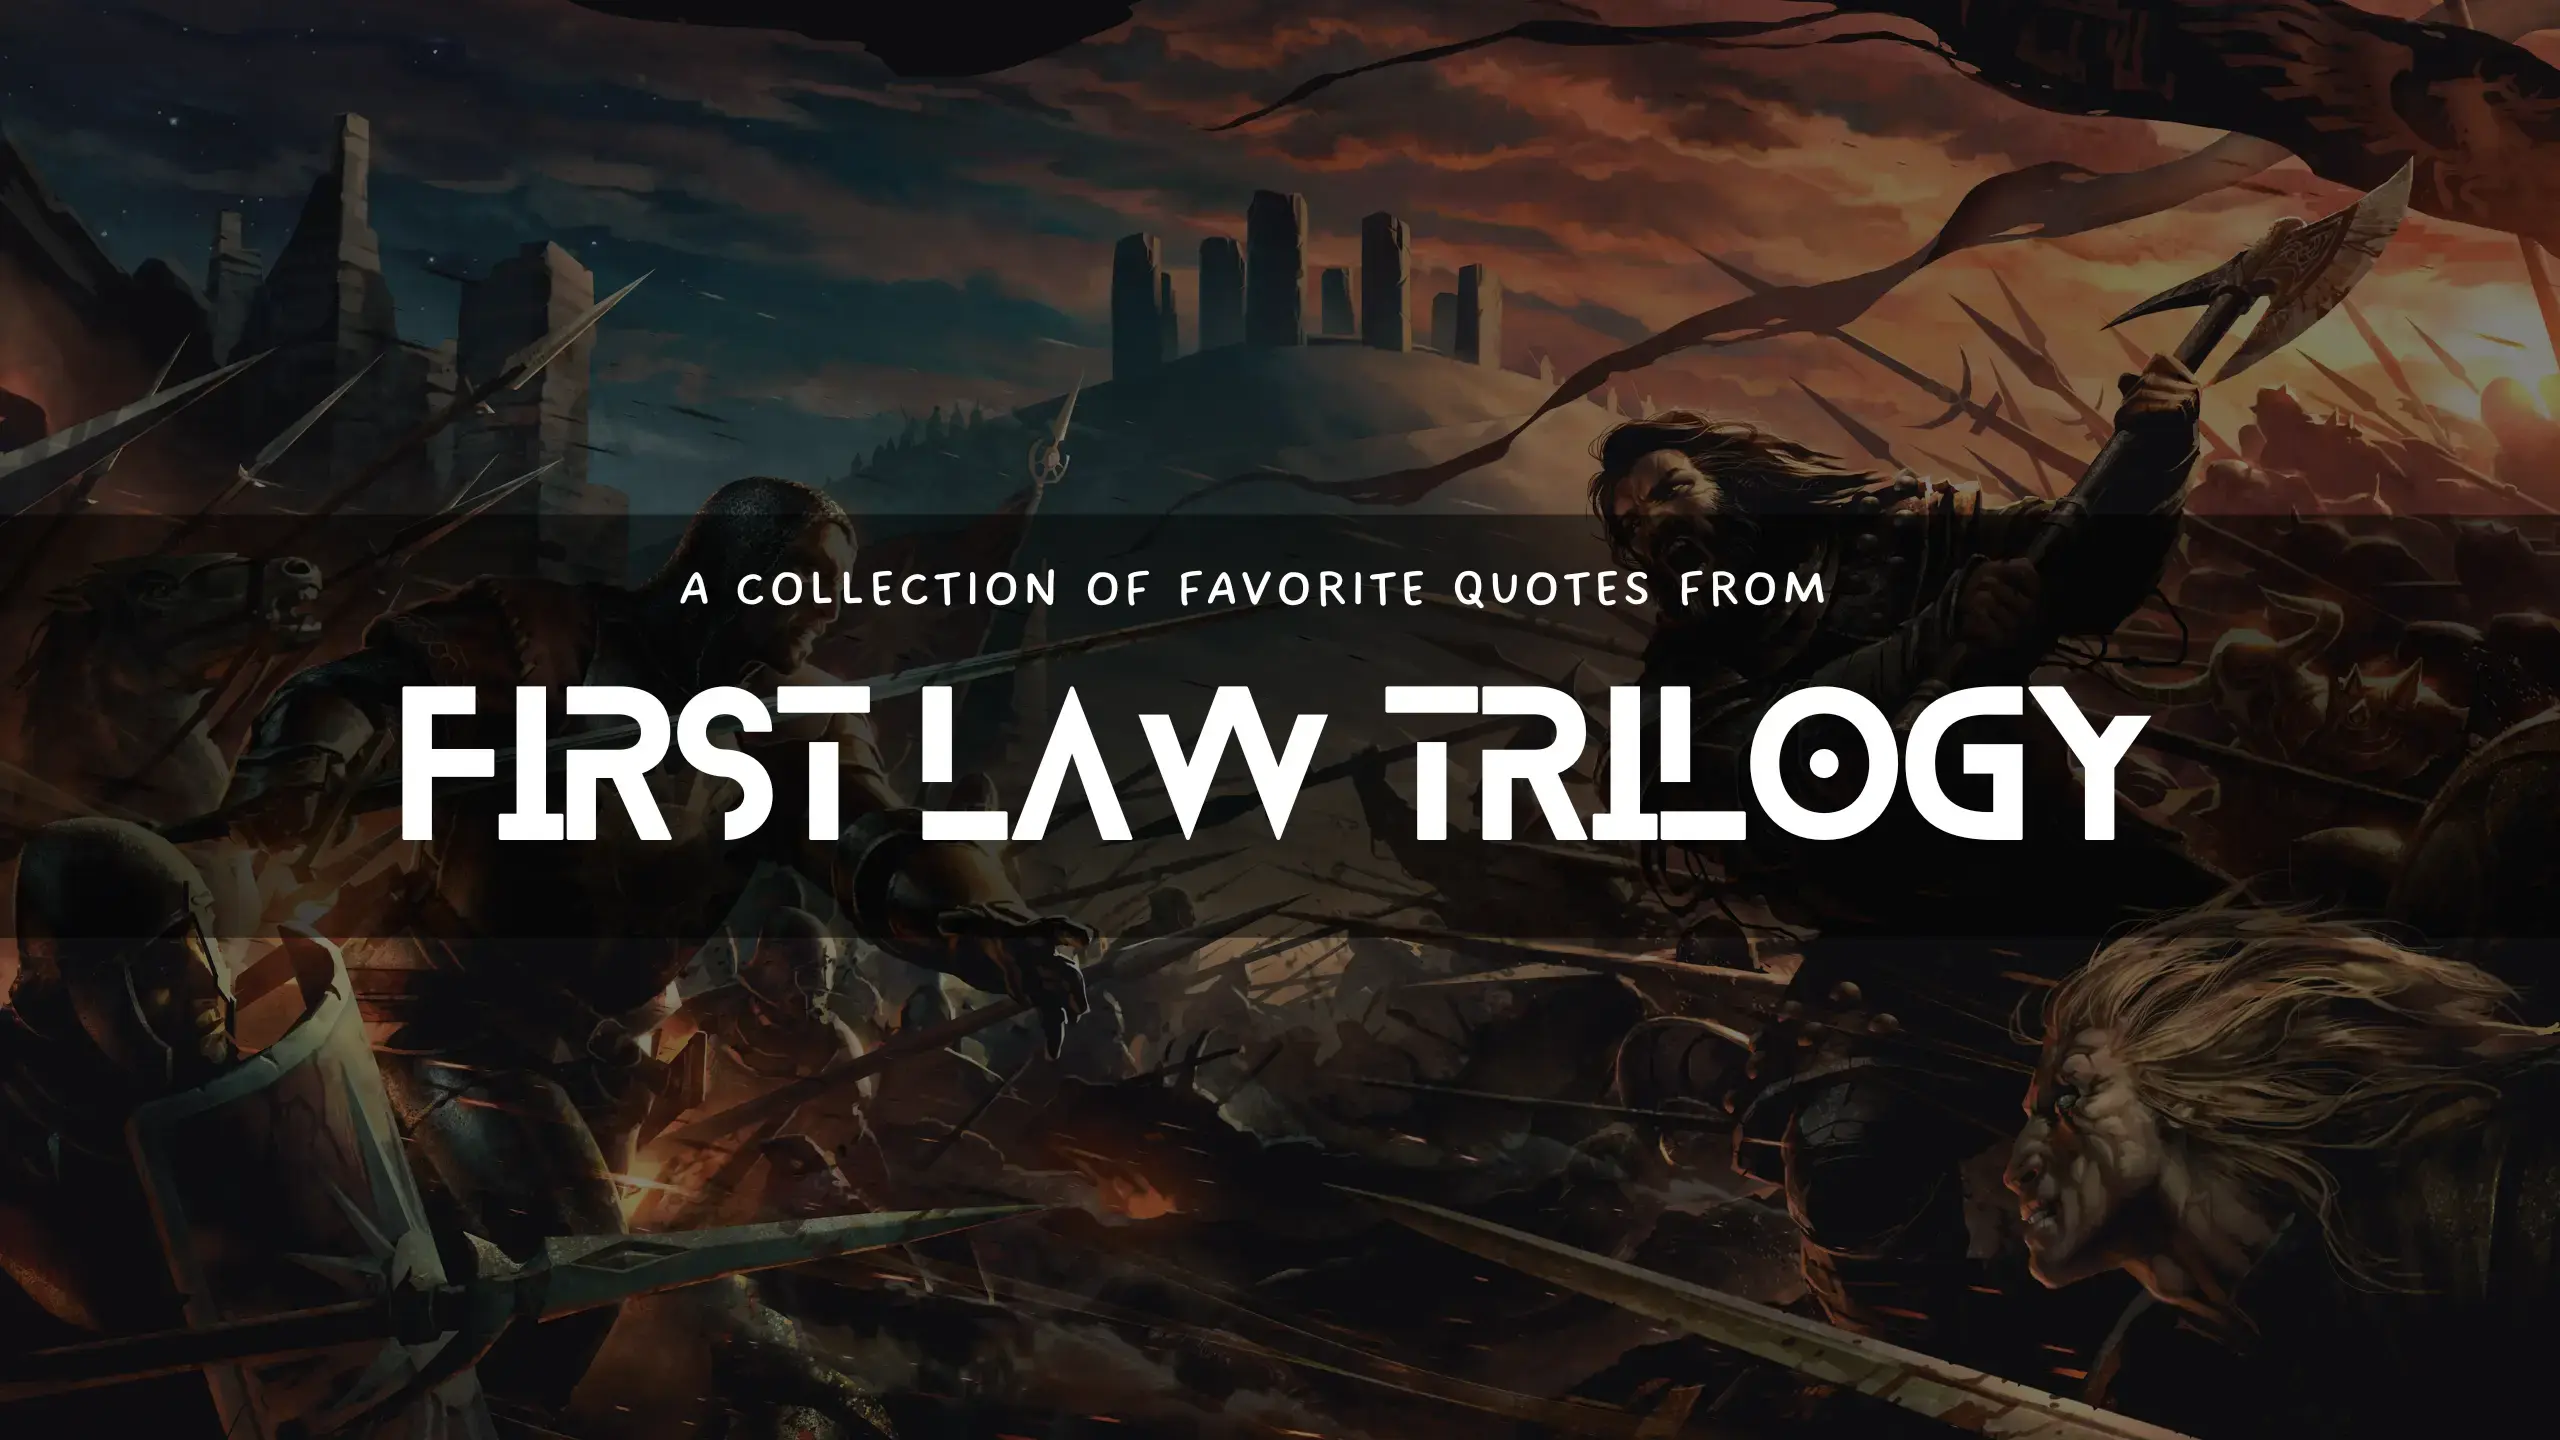 First Law Trilogy by Joe Abercrombie